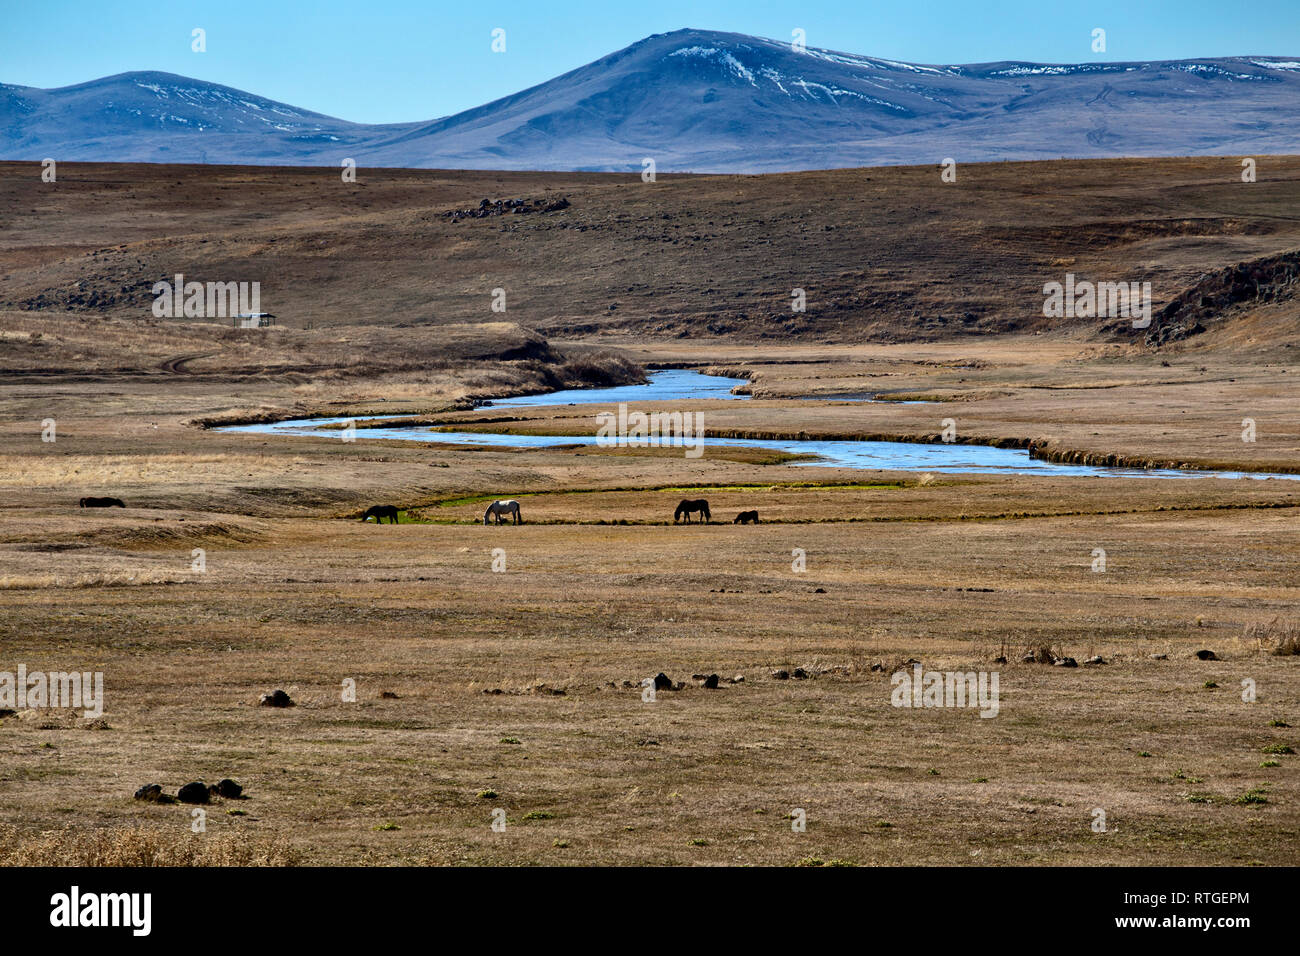 Mountain valley landscape, Martuni, Gegharkunik province, Armenia Stock Photo